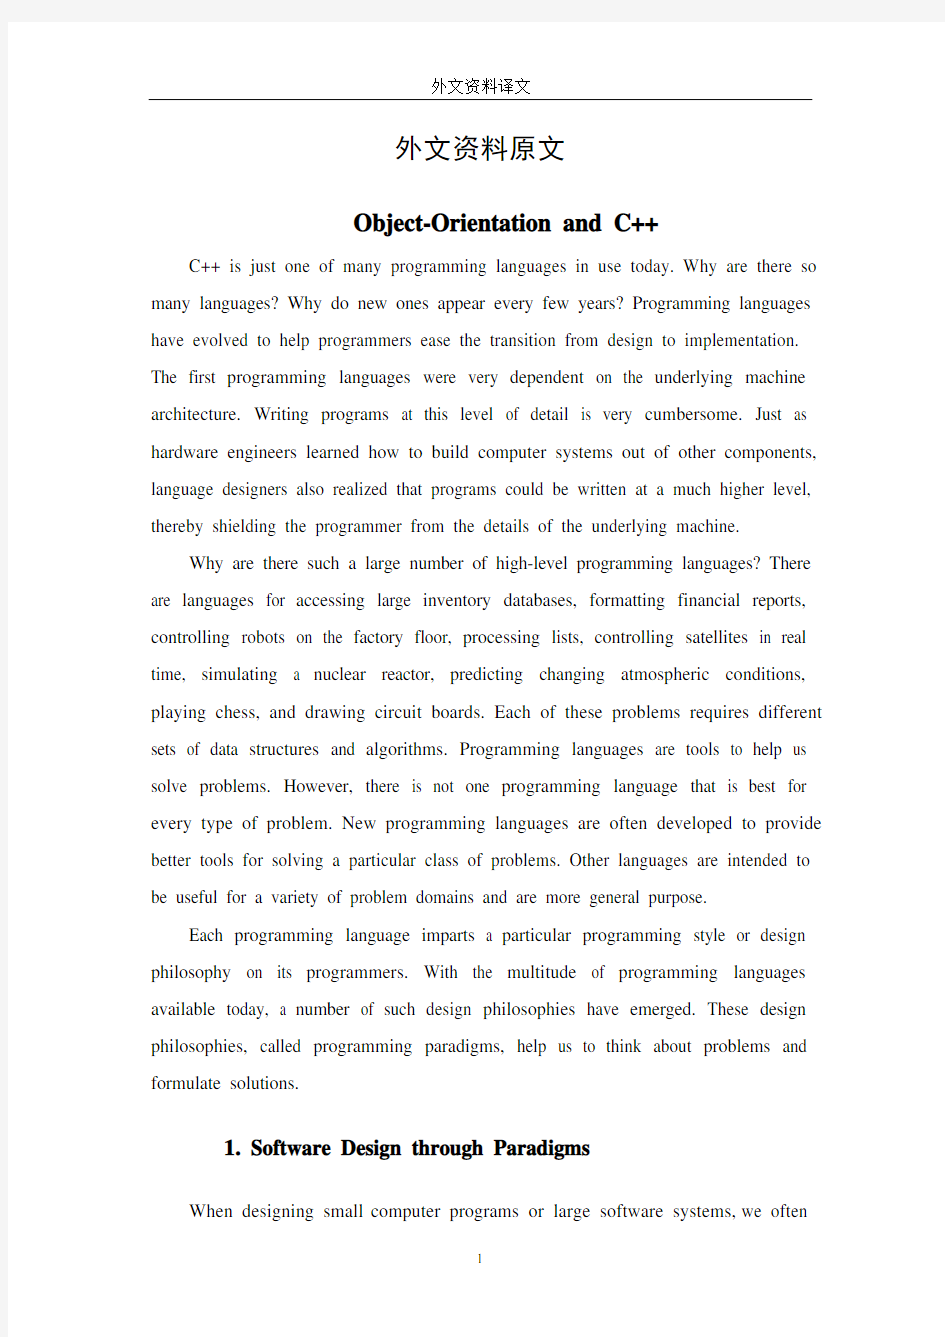 Object-Orientation and C++编程外文文献及中文翻译